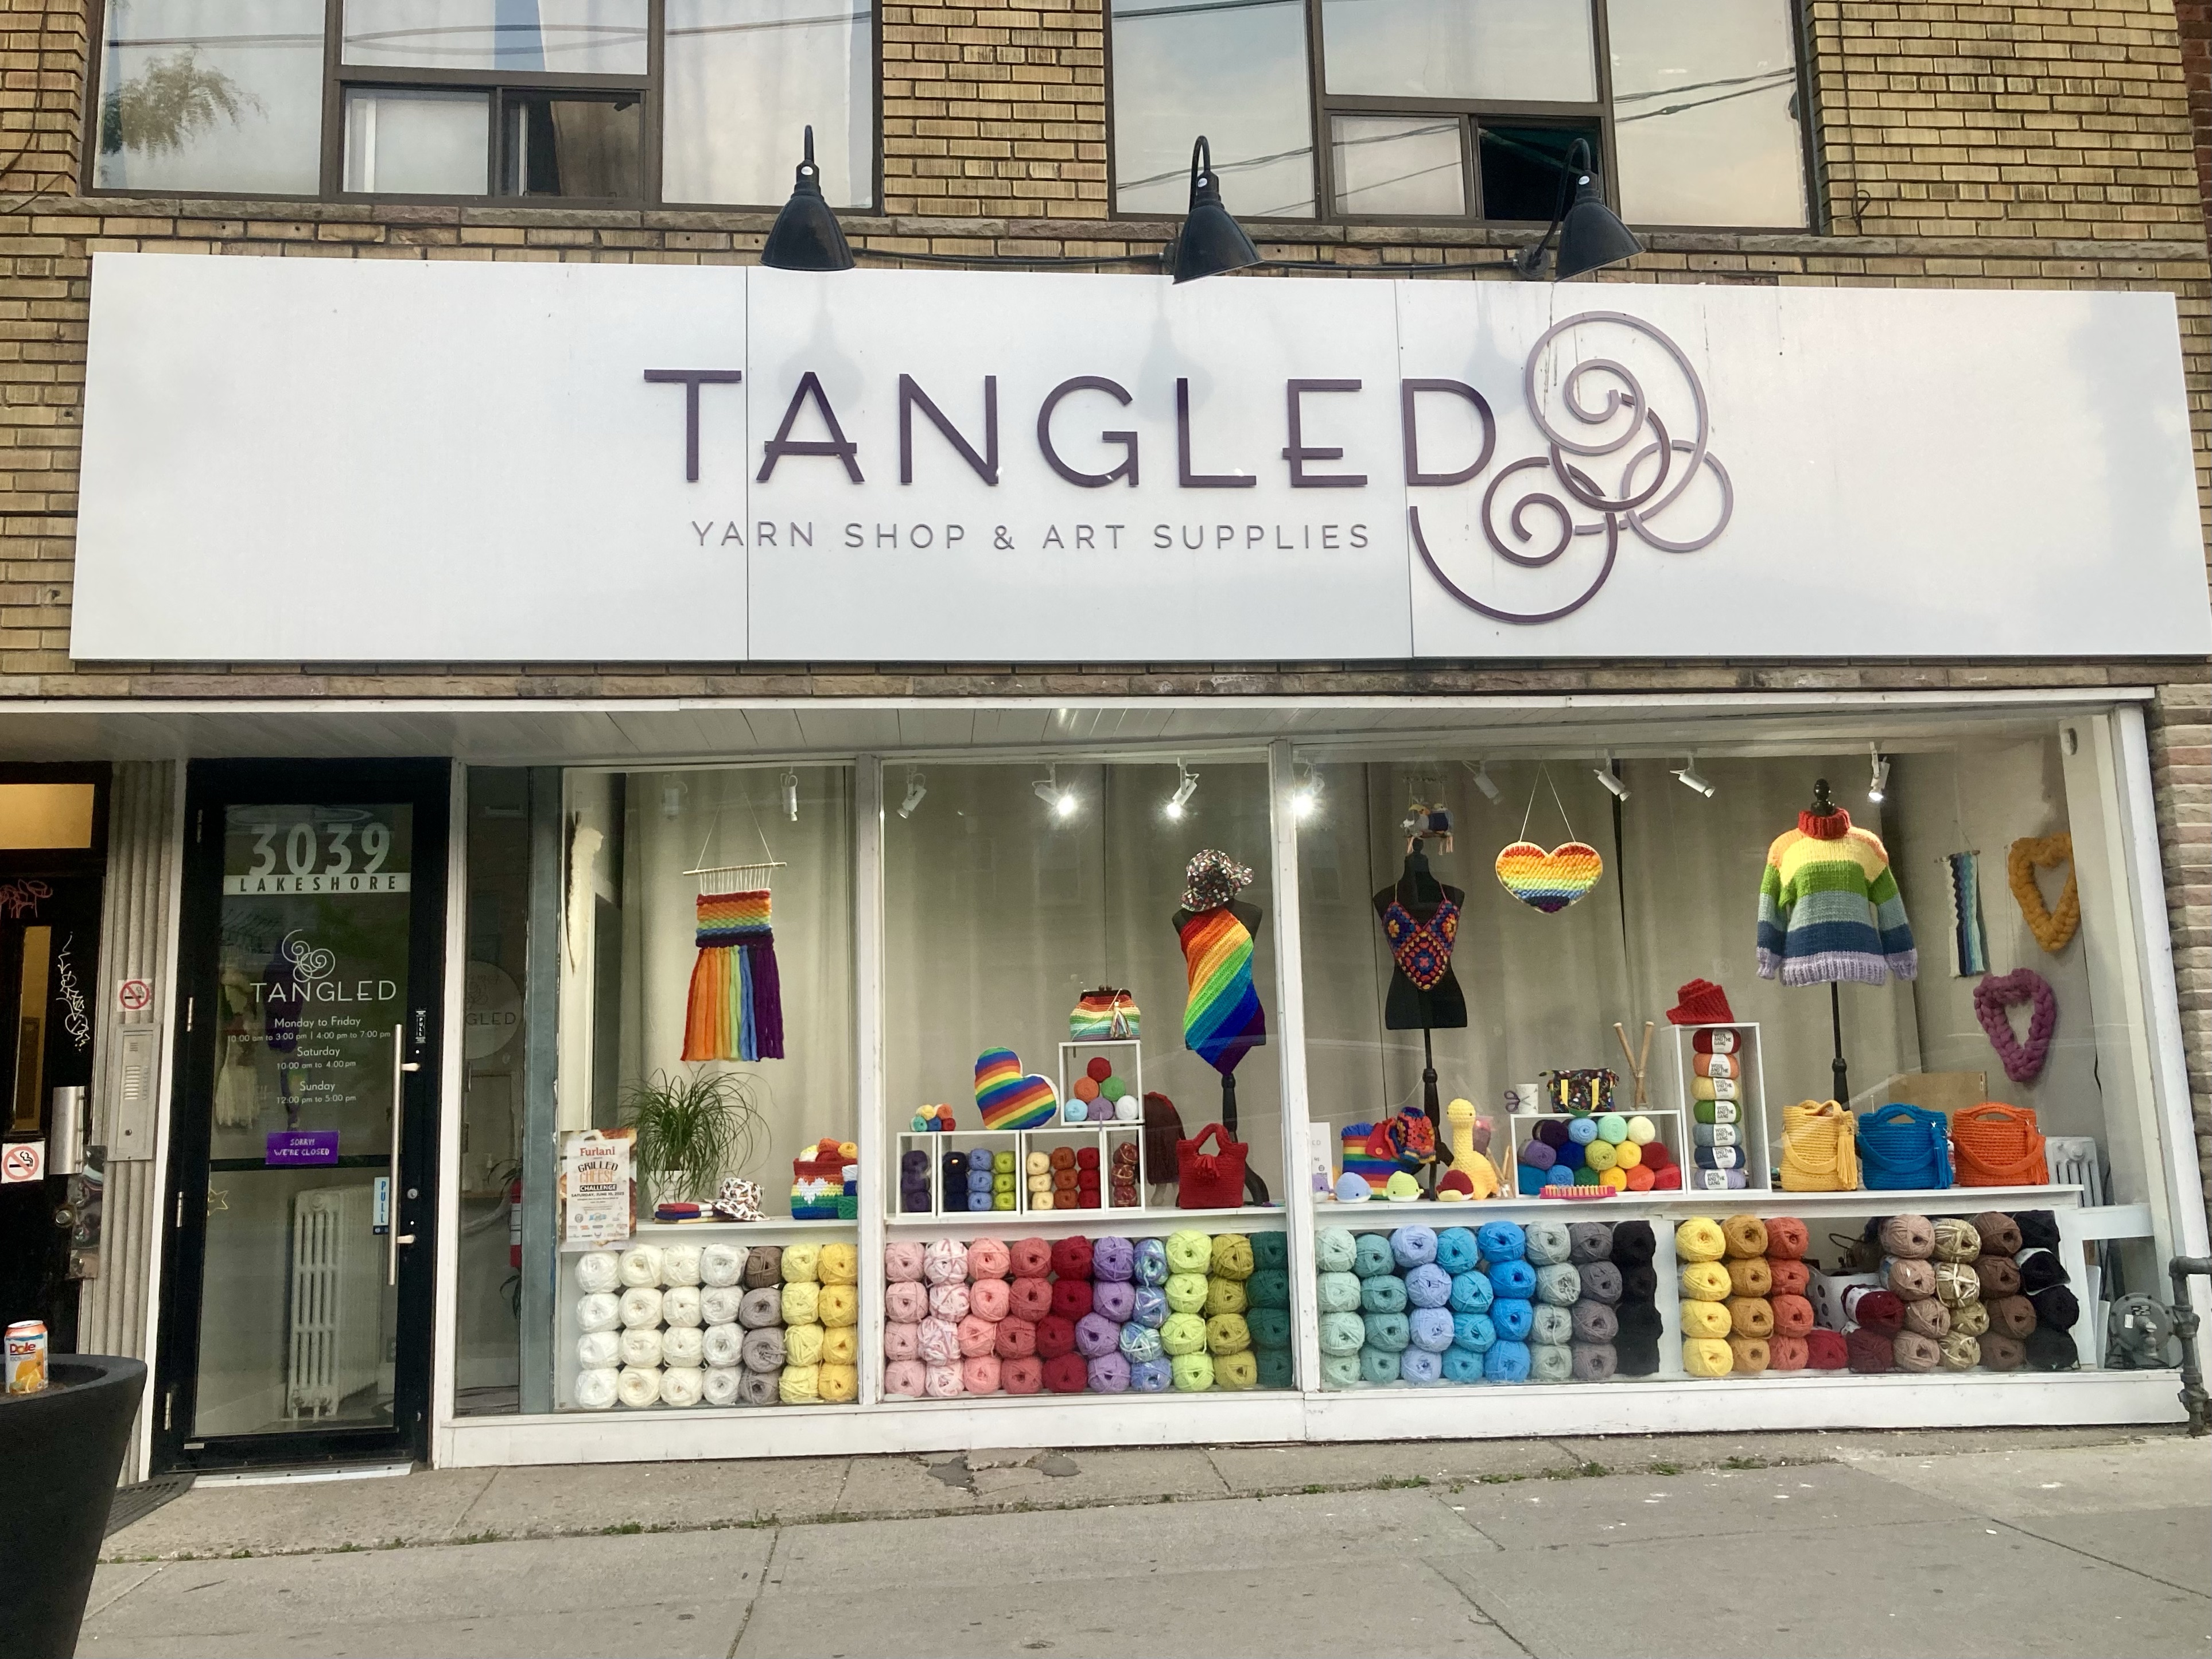 Tangled Up Yarn Shop & Art Supplies on Lake Shore